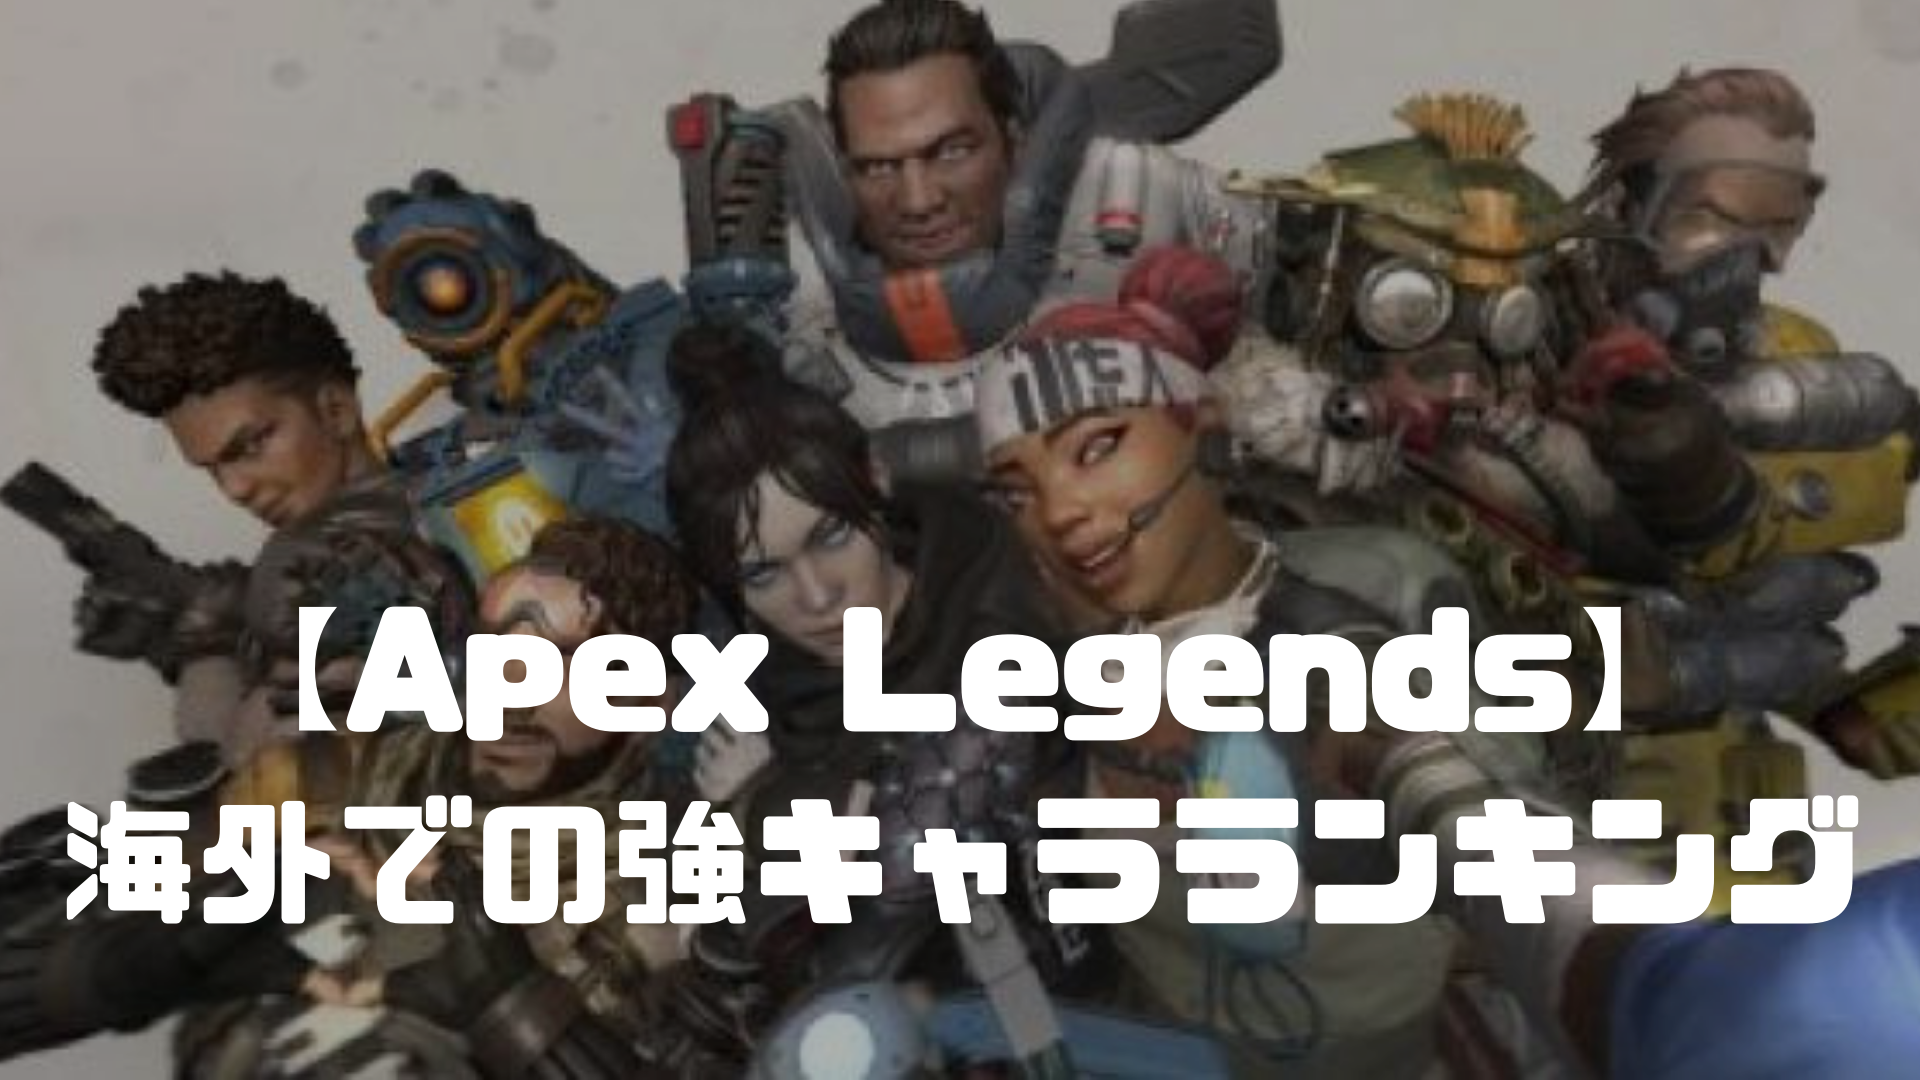 Apex Legends 海外での強キャラランキング 冷凍みかんの冷凍庫